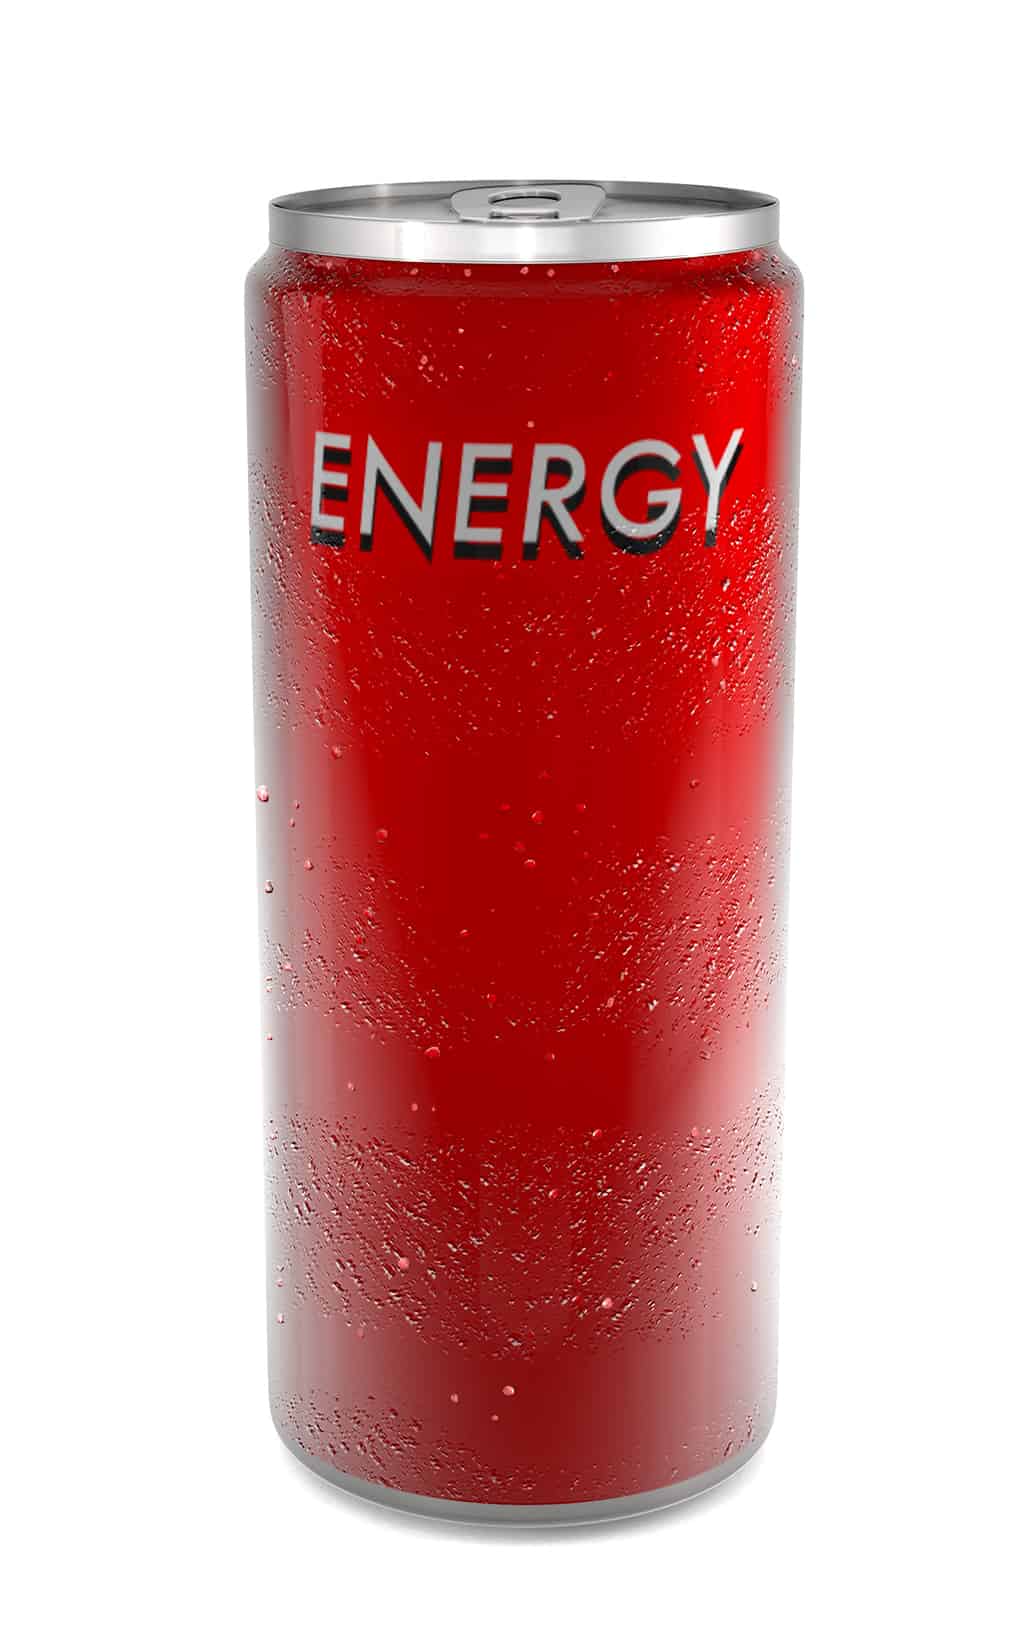 This energy drink ingredient is making men “rocky”